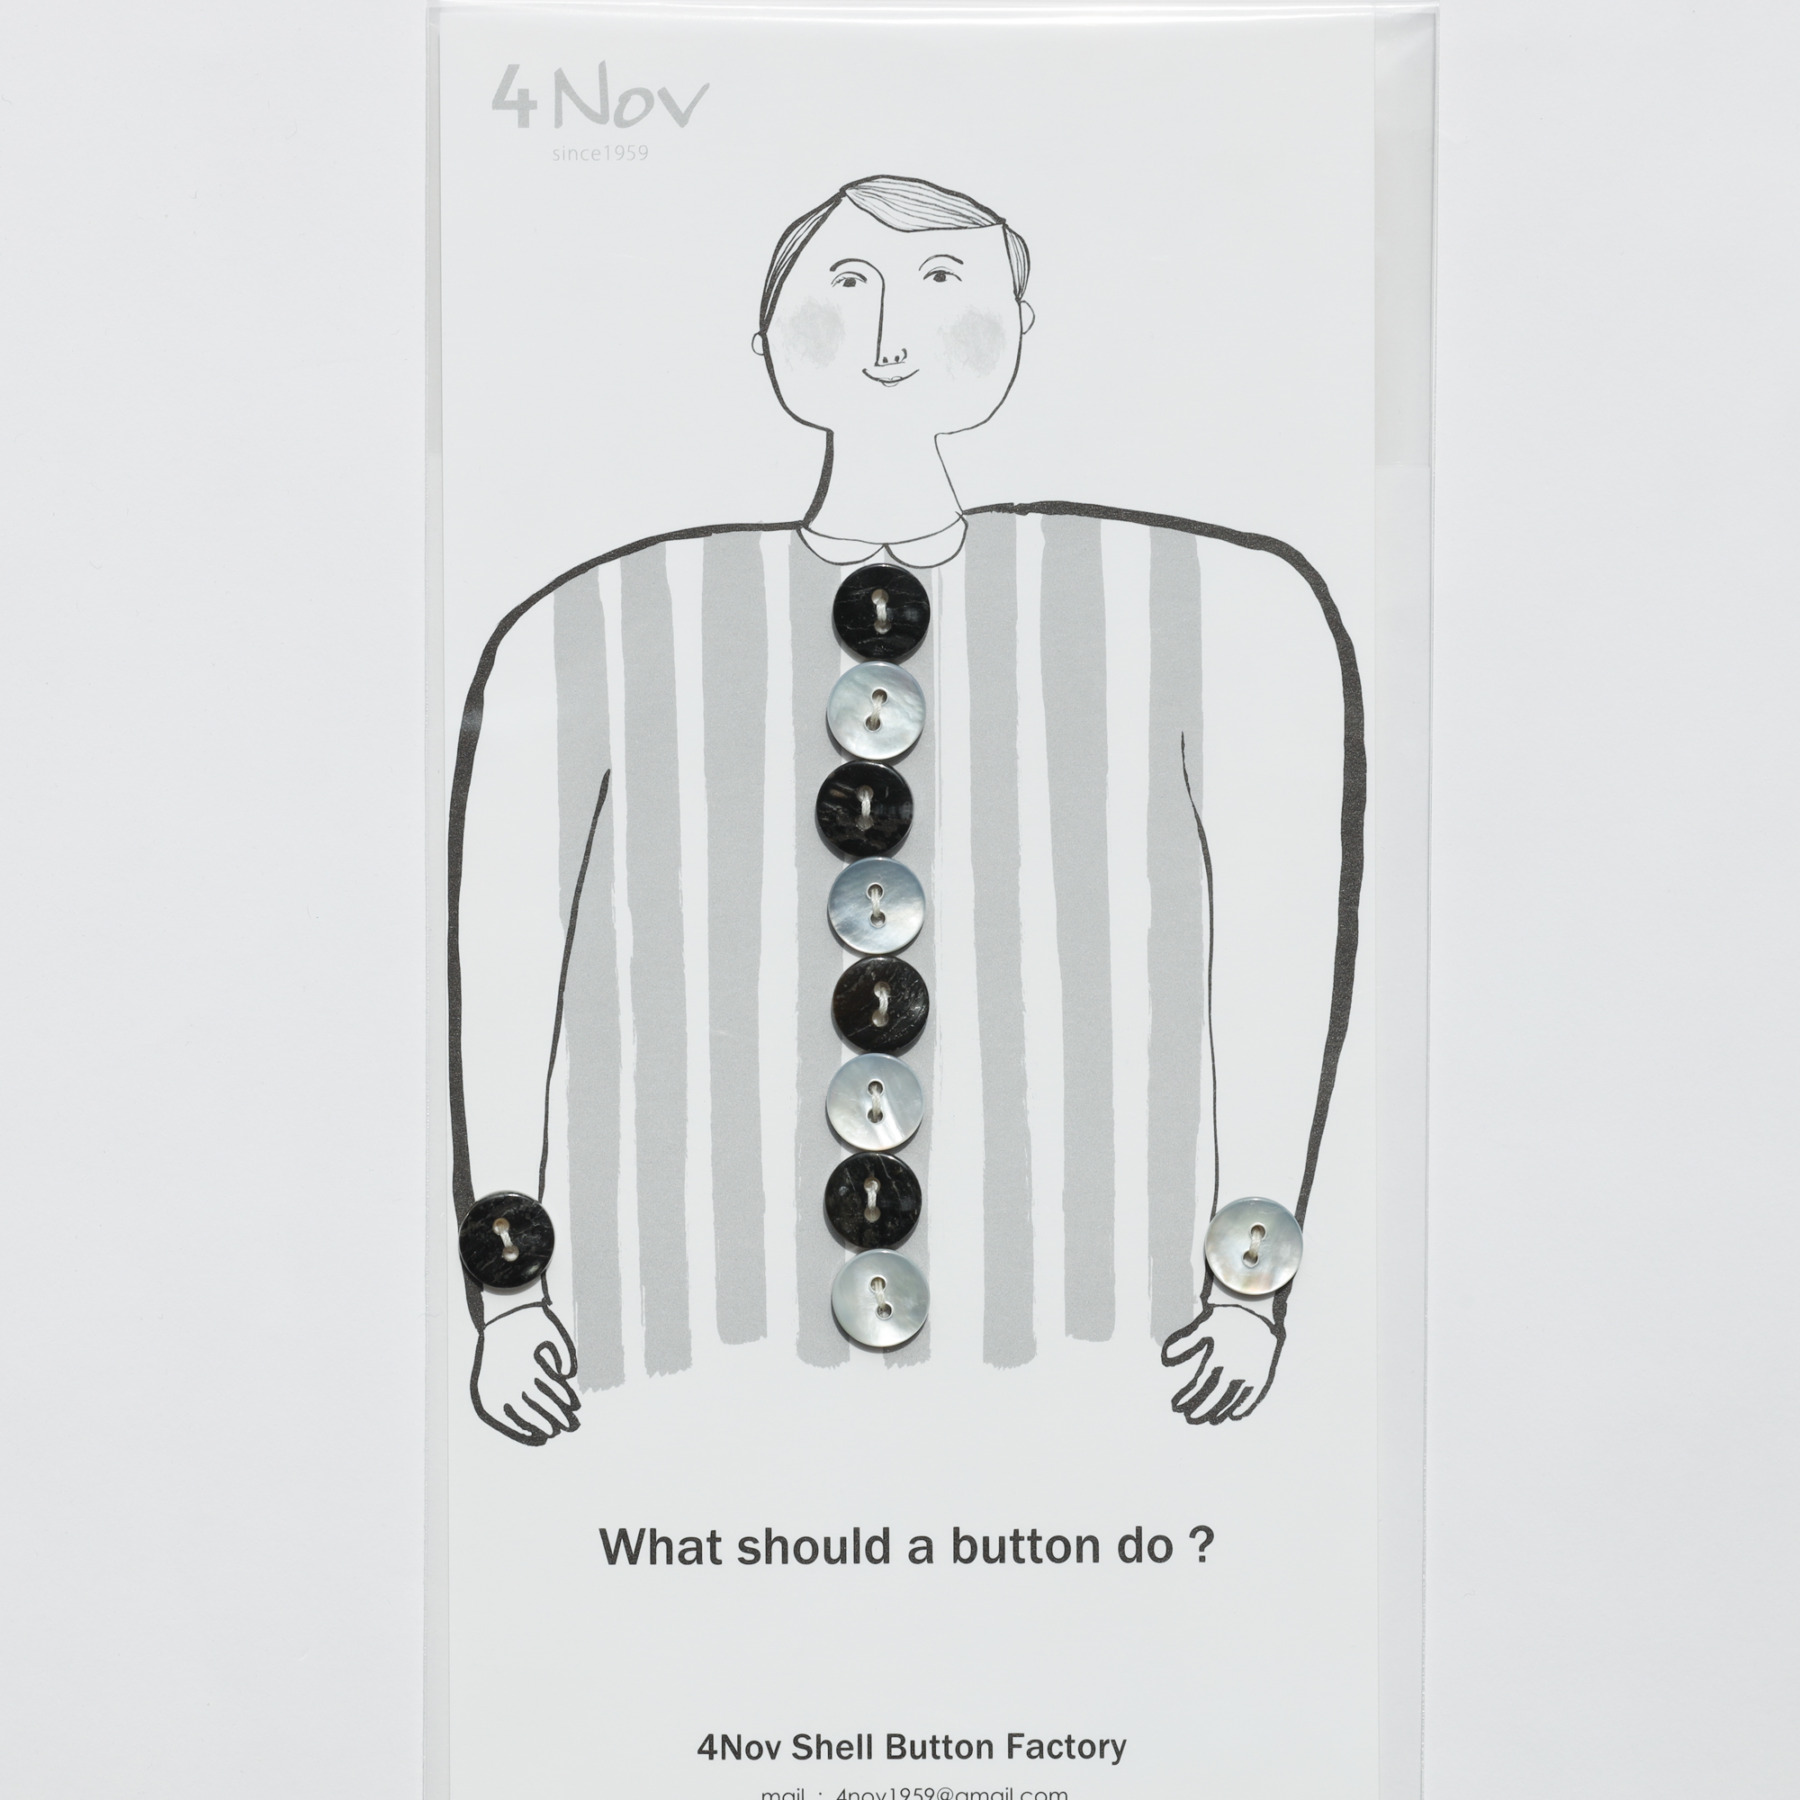 4Nov 黒蝶貝ボタン (直径13mm / ブラック、ホワイト色 / 丸・平型 / 2つ穴)